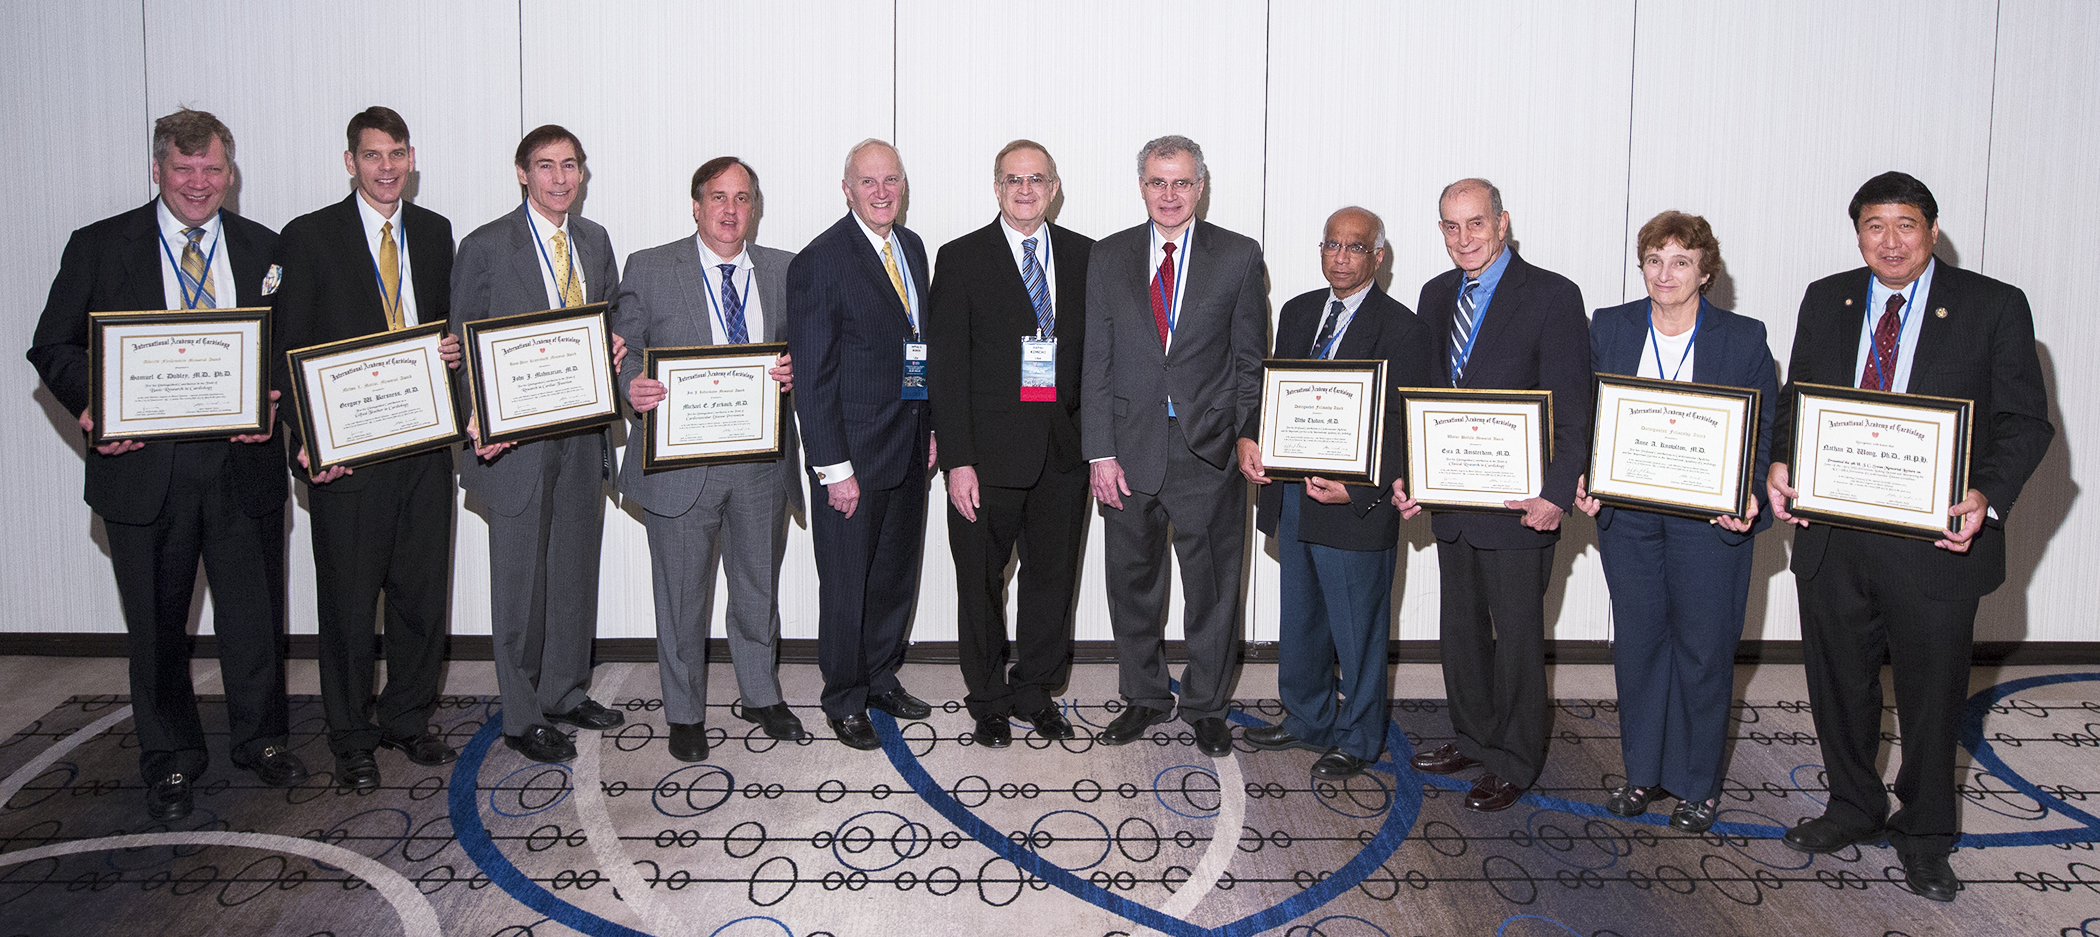 International Academy of Cardiology 2015 Awards